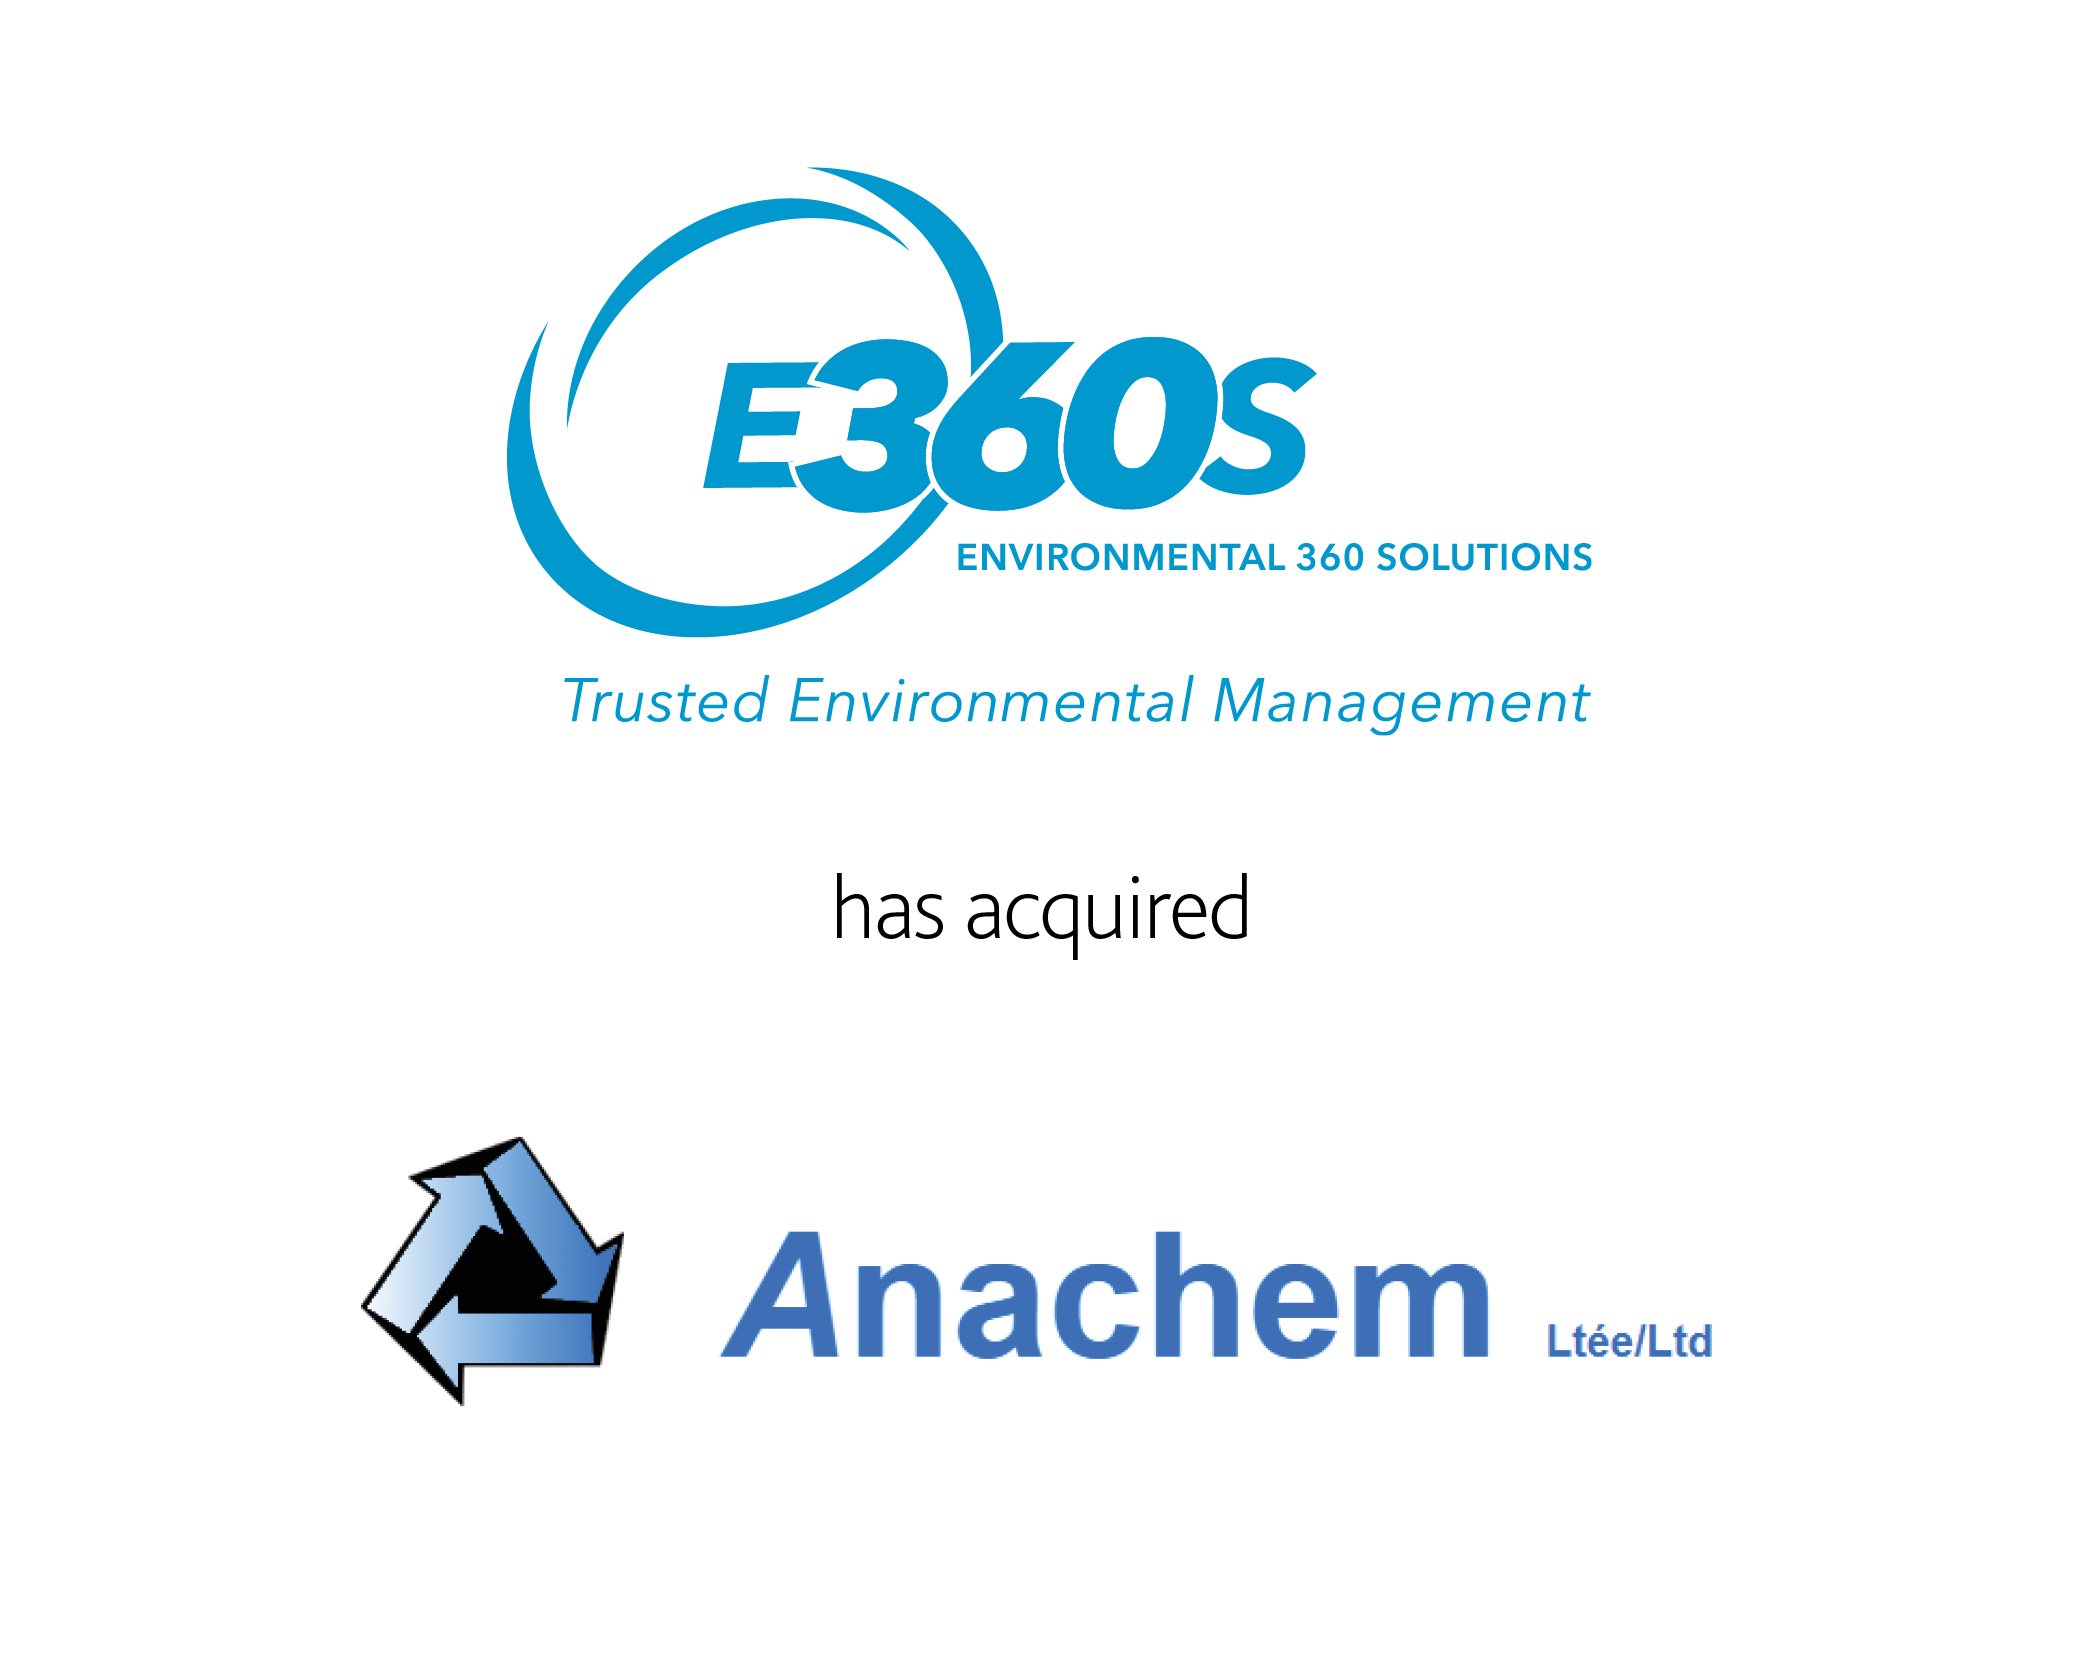 Environmental 360 Solutions has acquired Anachem Ltd